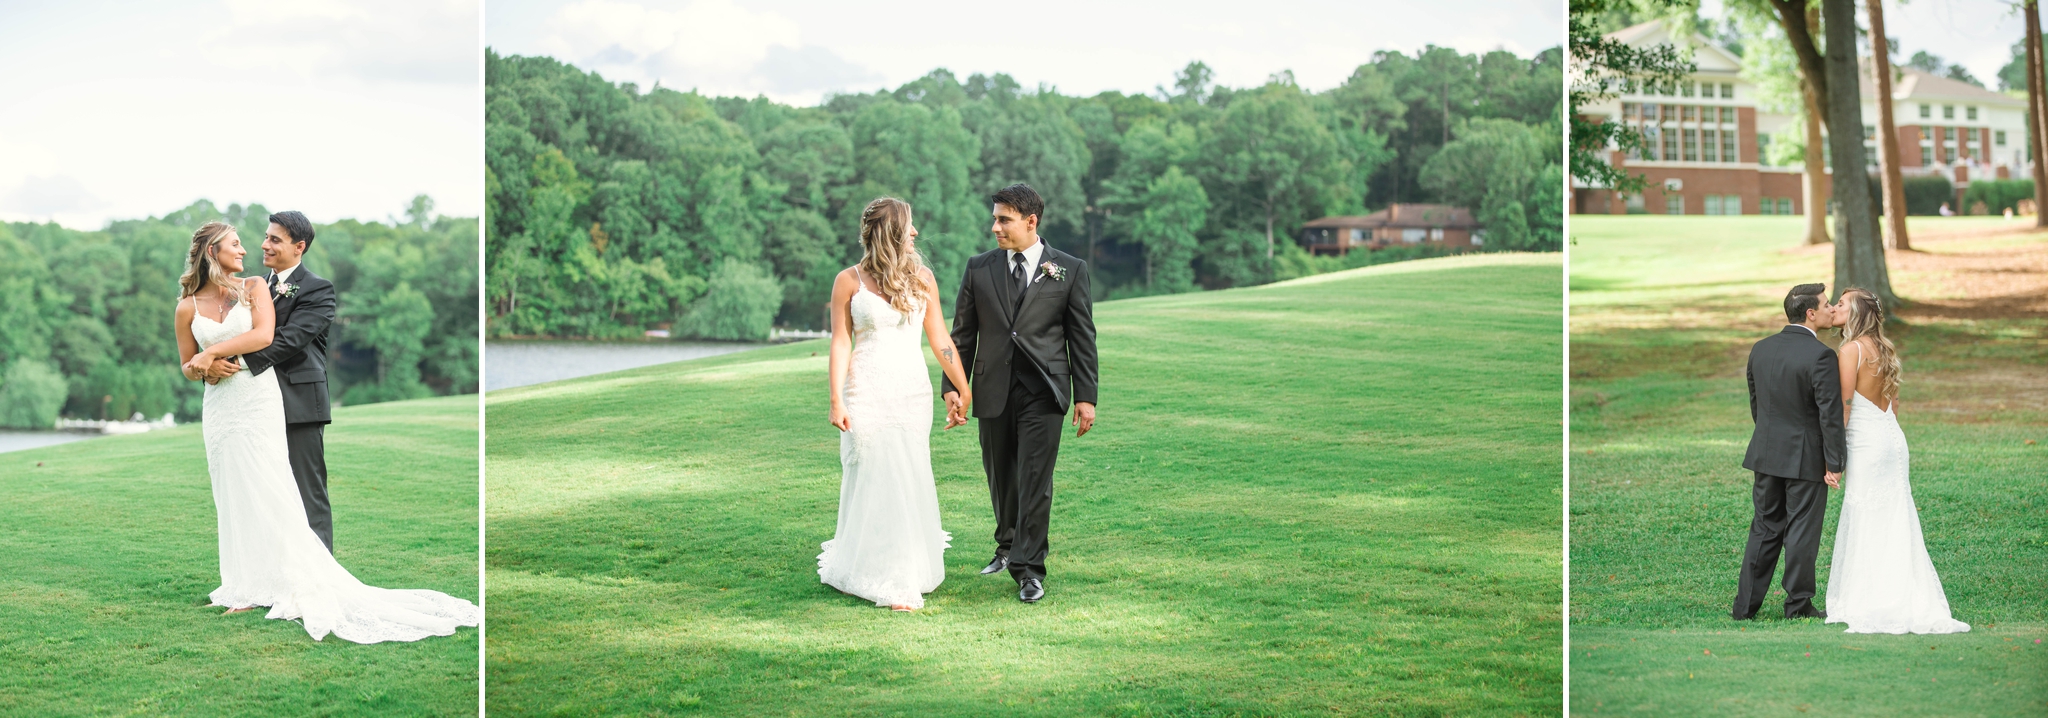 Wedding at Carolina Trace Country Club in Sanford, NC - Johanna Dye Photography